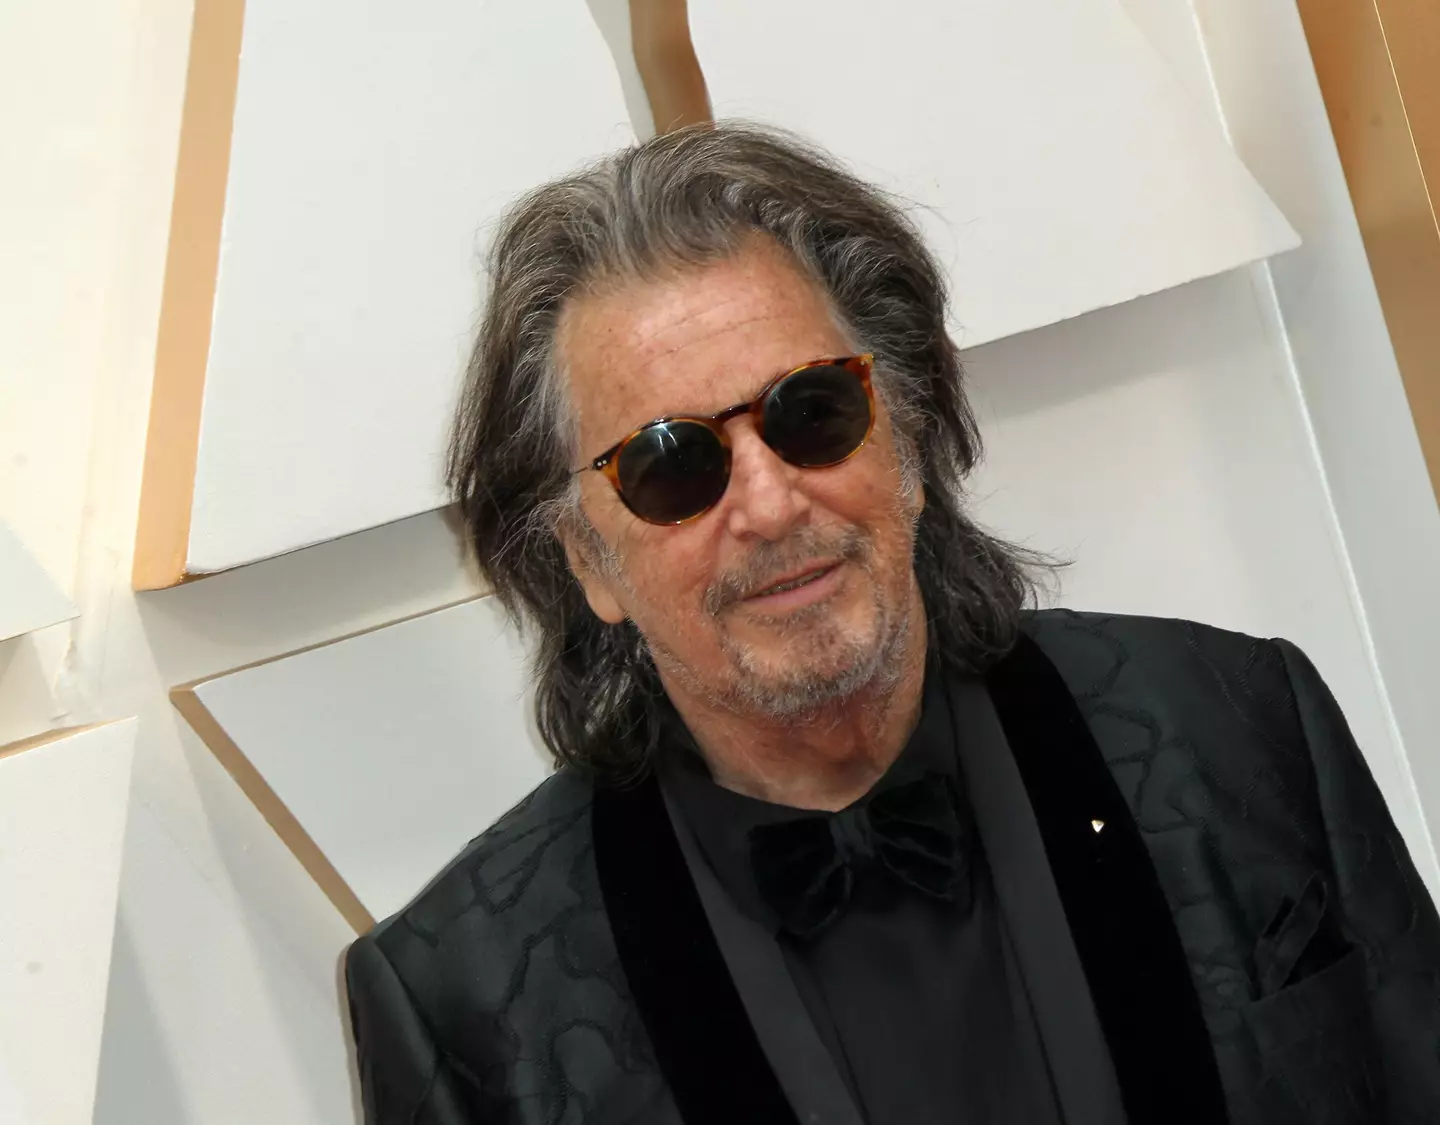 Al Pacino described his experience at the Oscars.